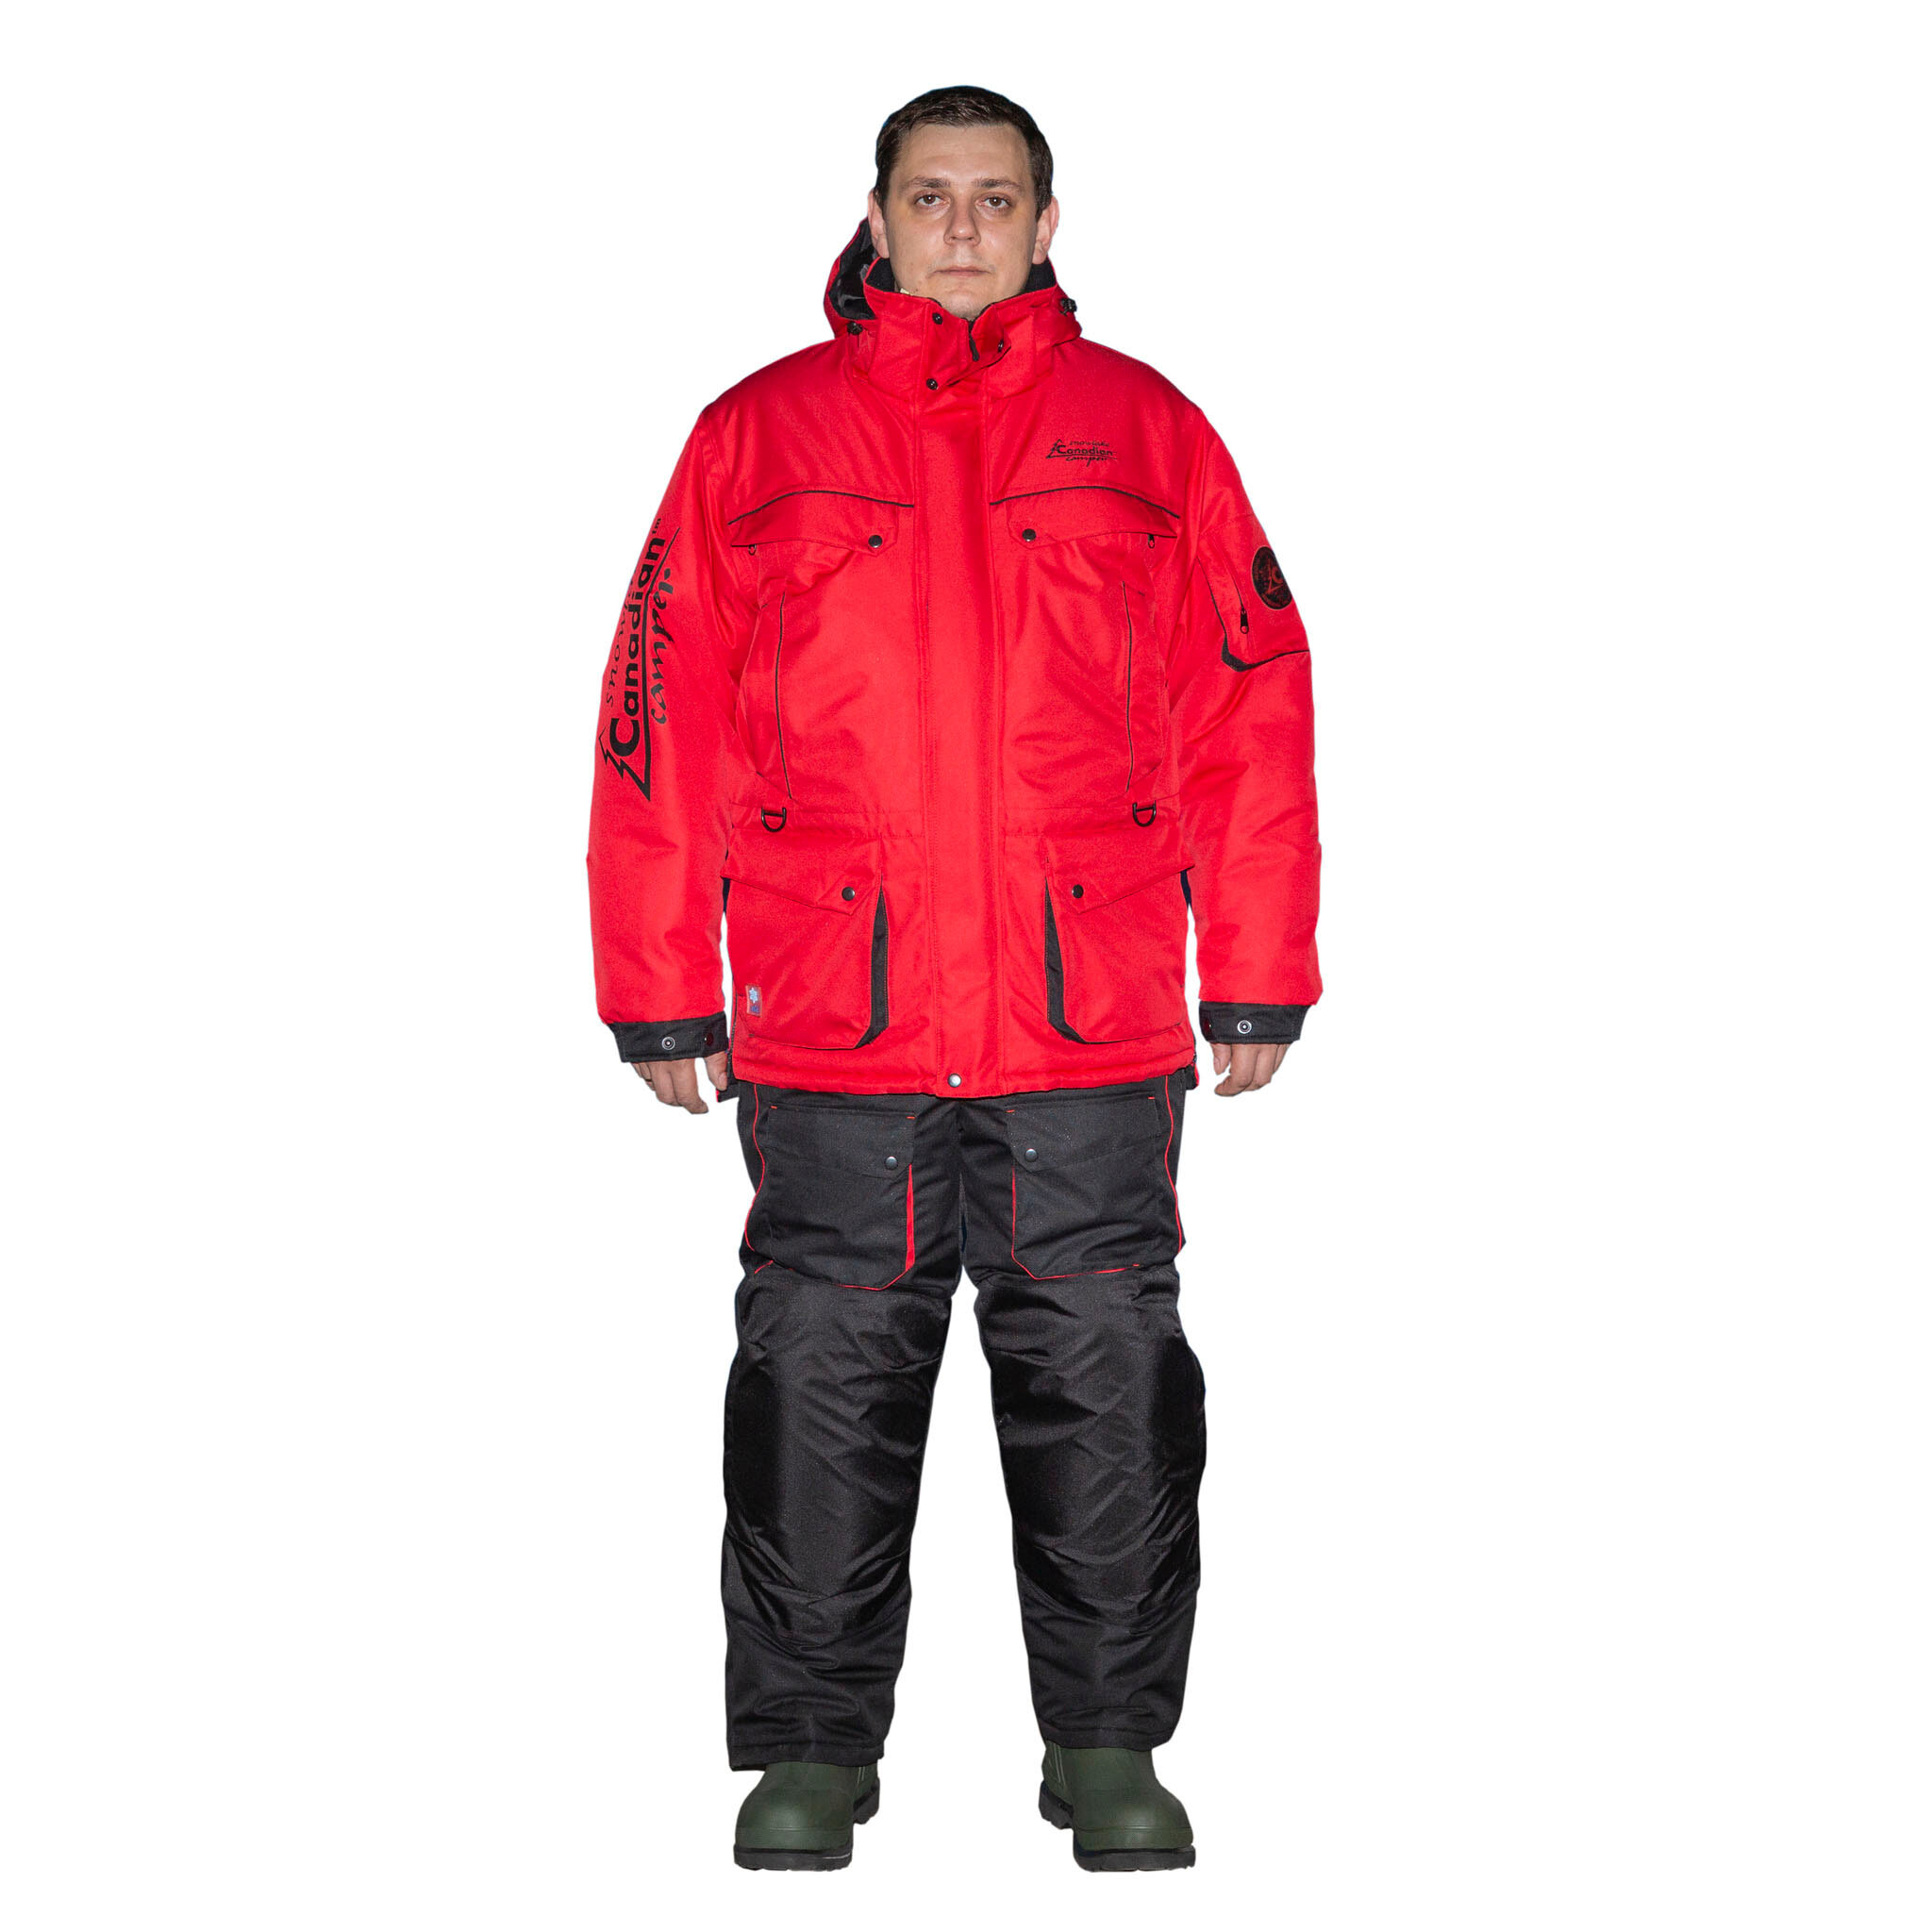 Костюм рыболовный зимний Canadian Camper SNOW LAKE PRO курткабрюки цвет blackred M